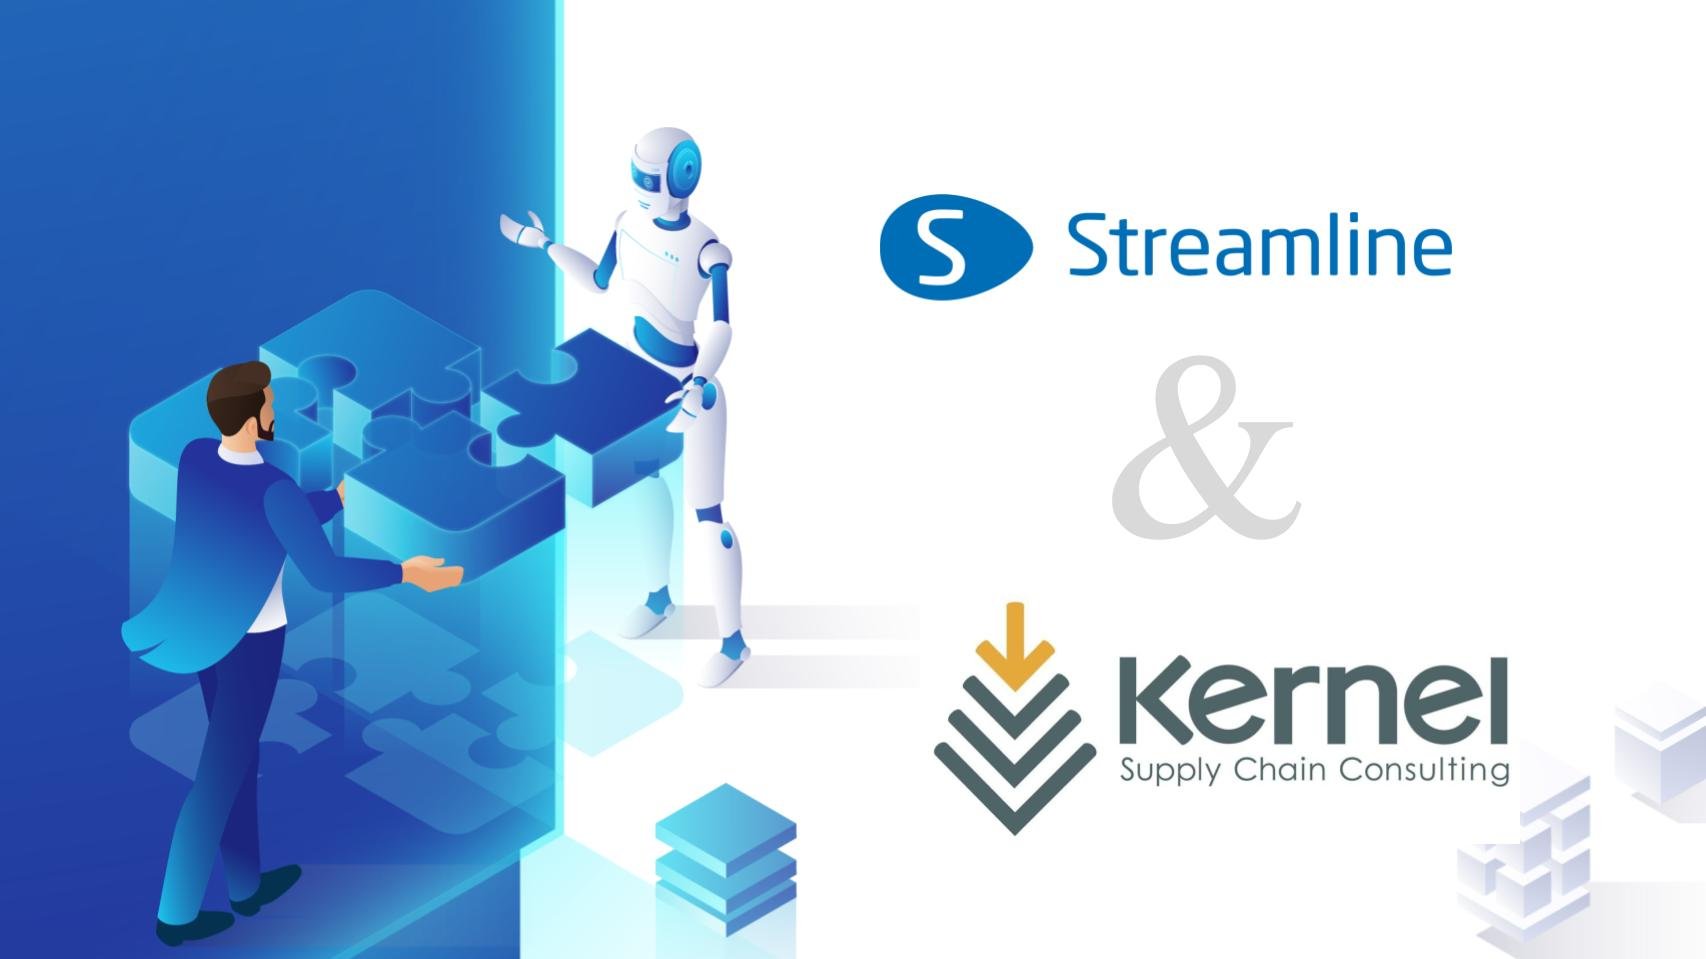 GMDH Streamline 和 Kernel Supply Chain Consulting 宣布建立有价值的合作伙伴关系